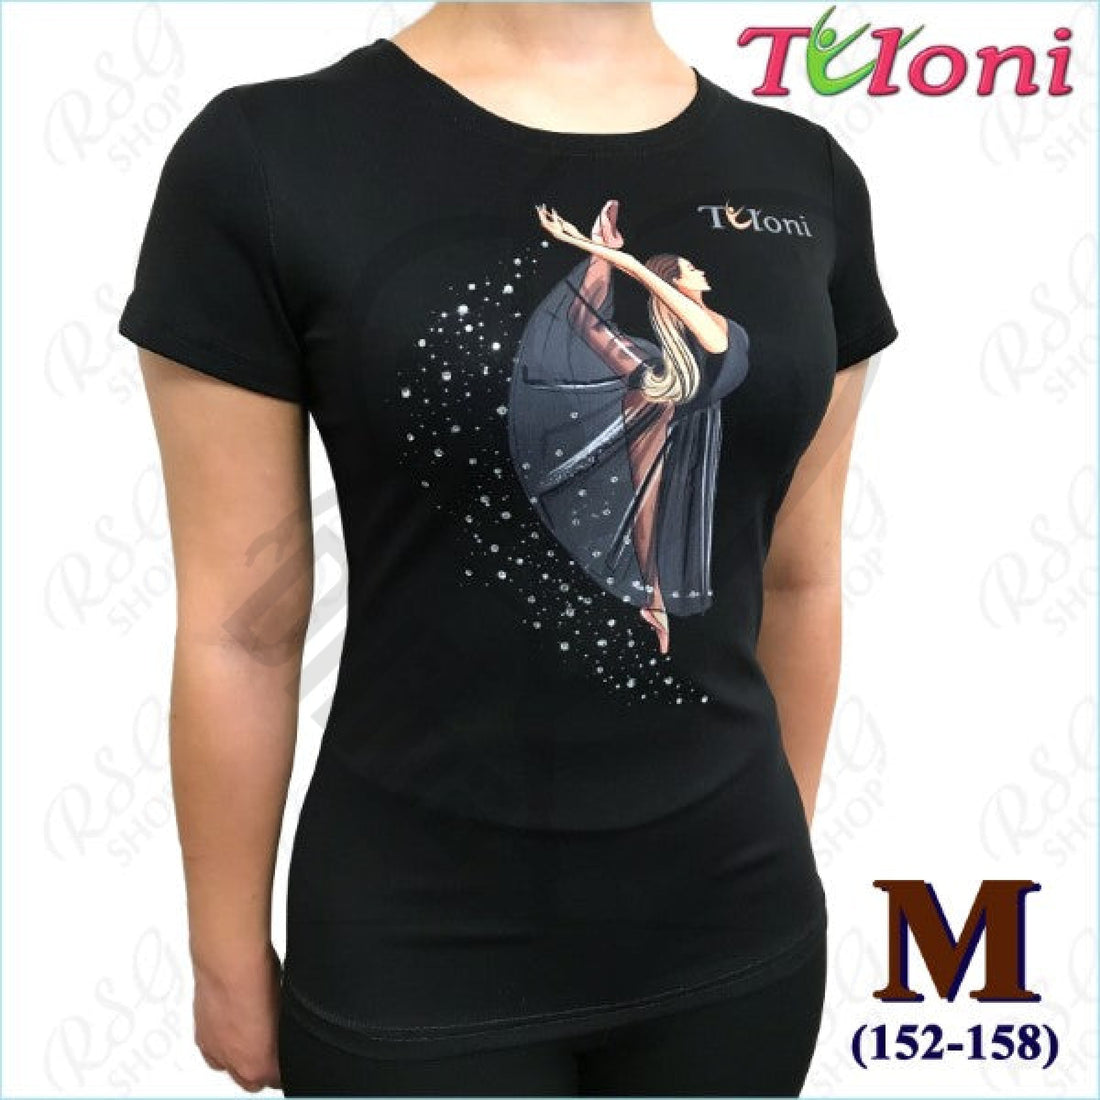 Tuloni Black T-Shirt Mod. Ballet M (152-158) T Shirts & Tops